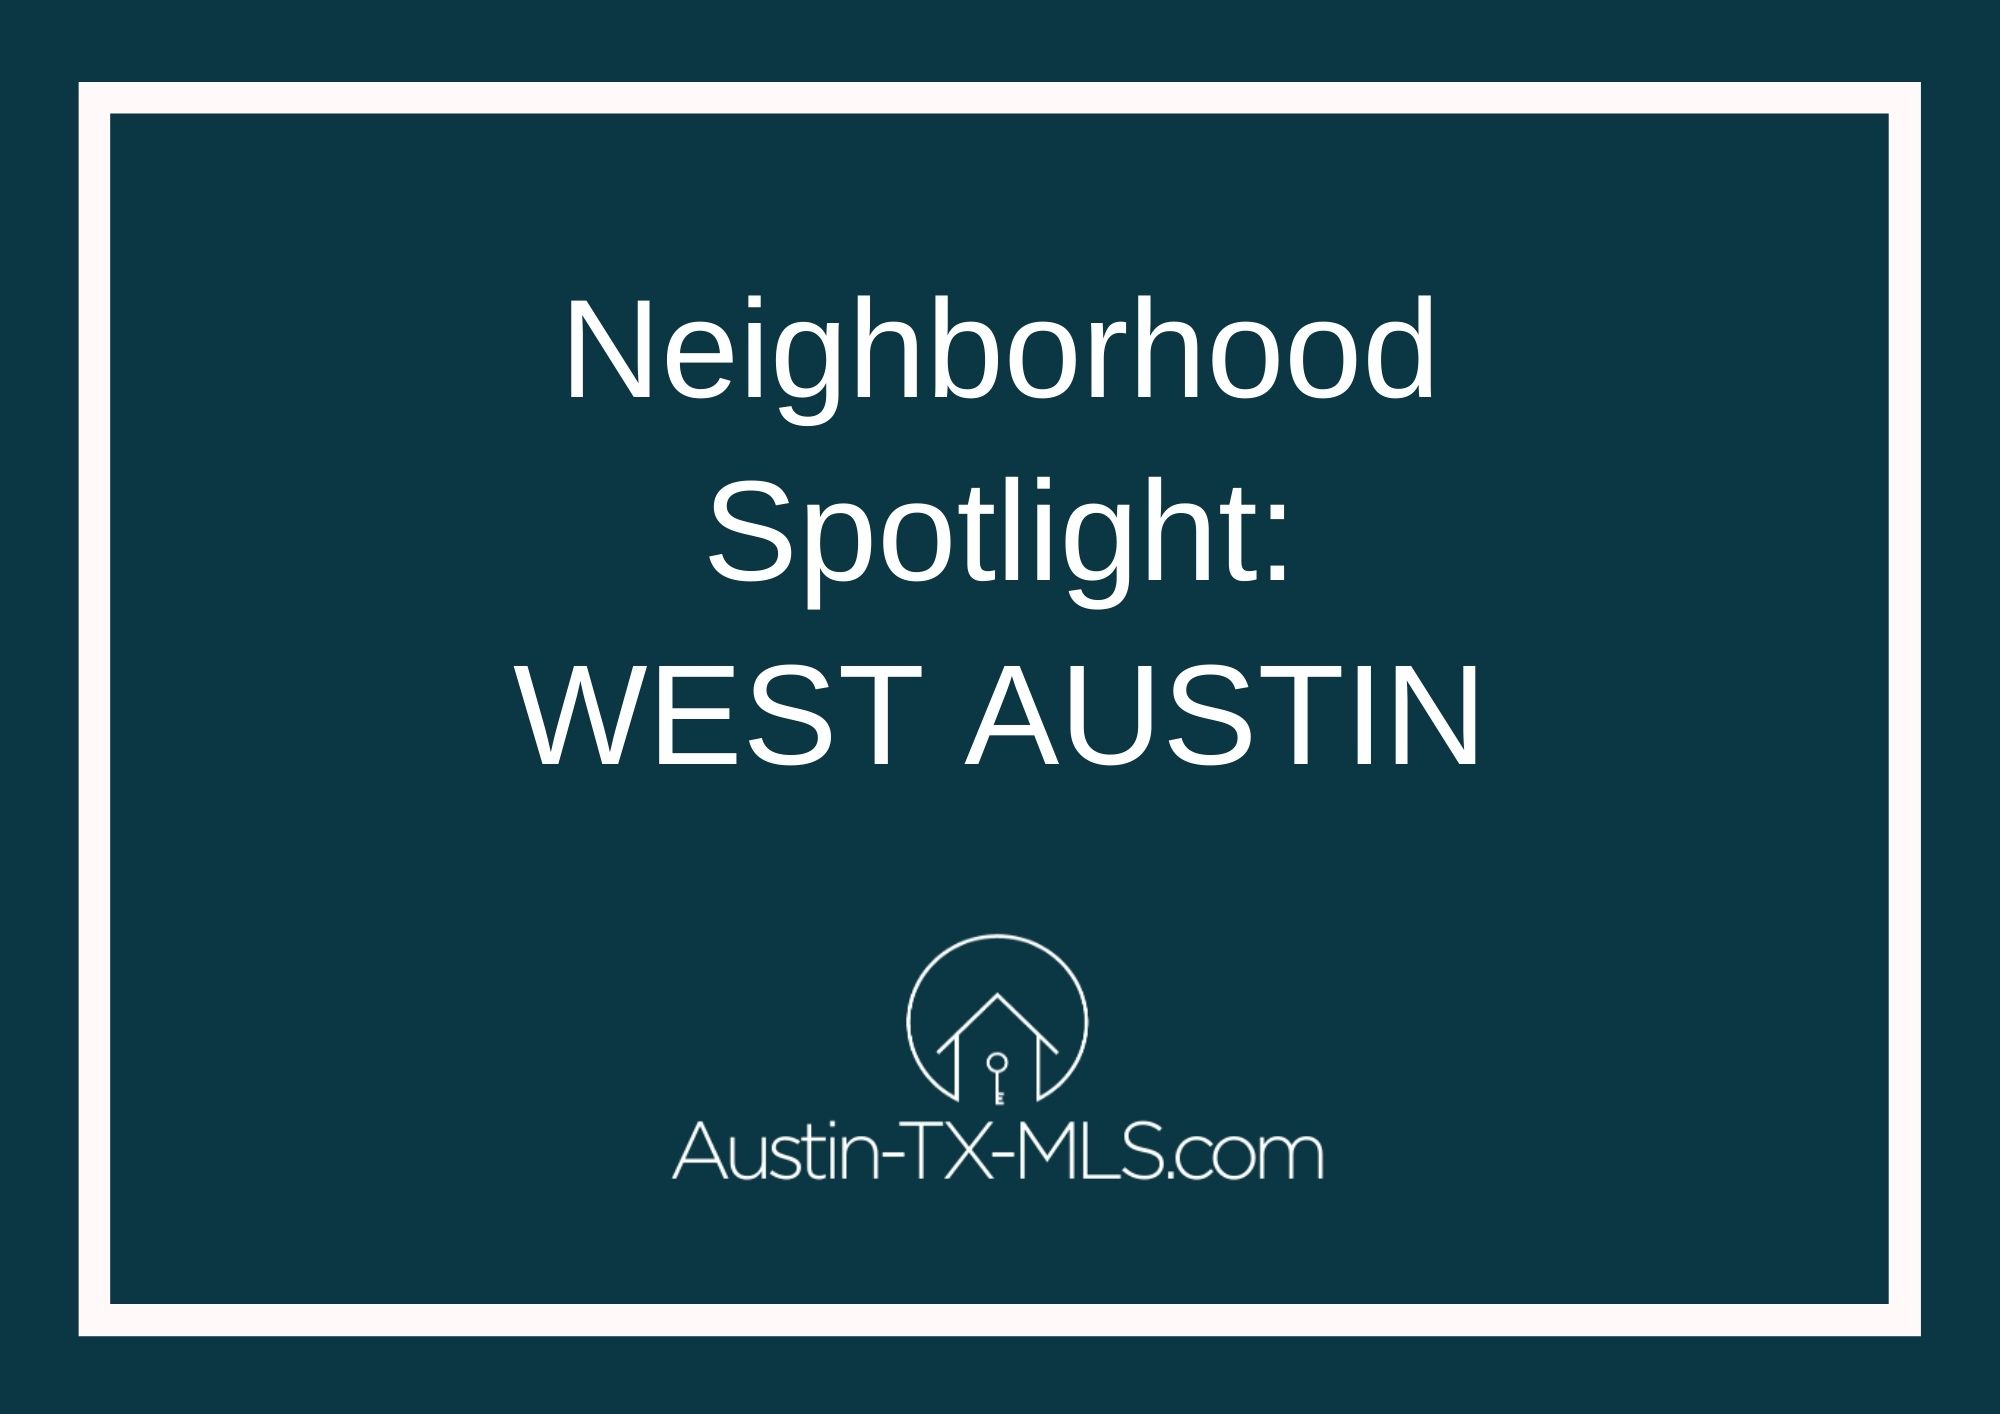 West Austin Neighborhood Spotlight Austin Texas real estate